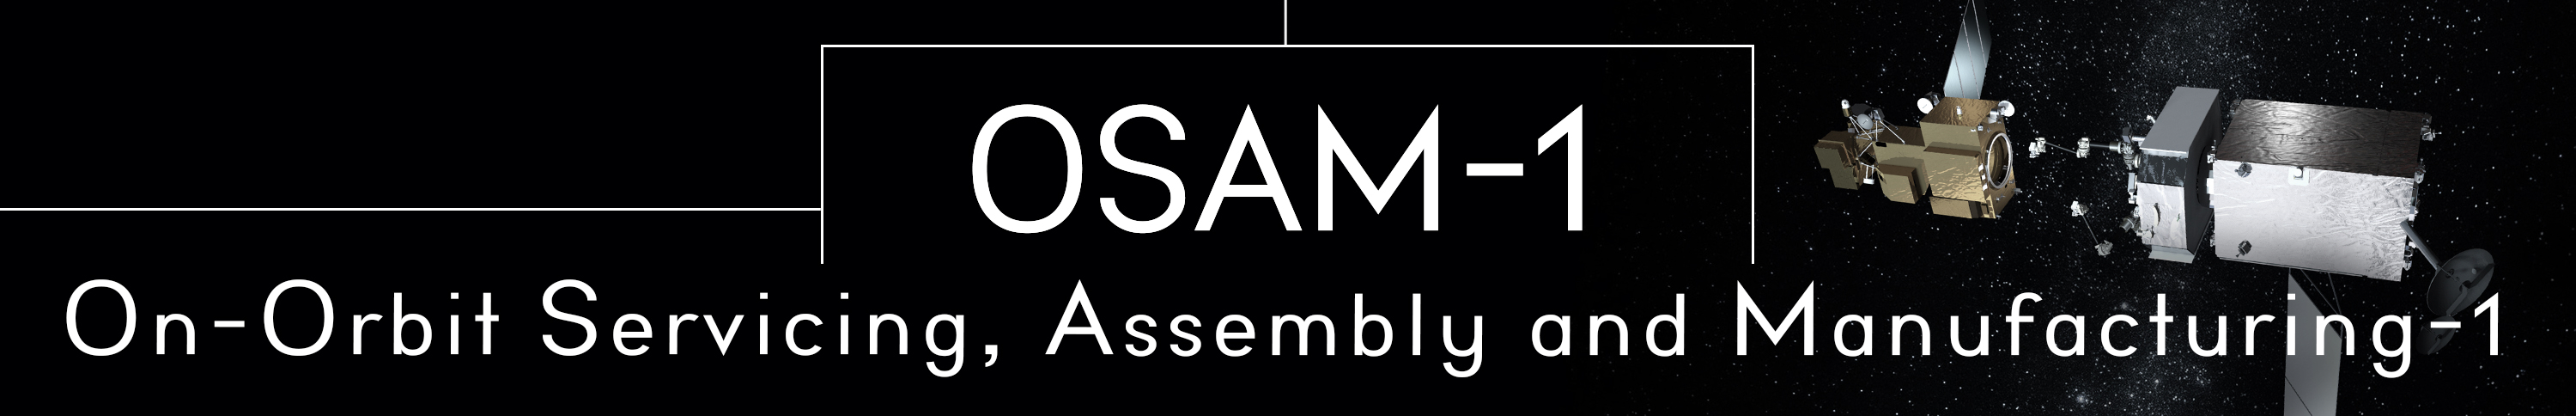 OSAM-1: Robotic Servicing Mission